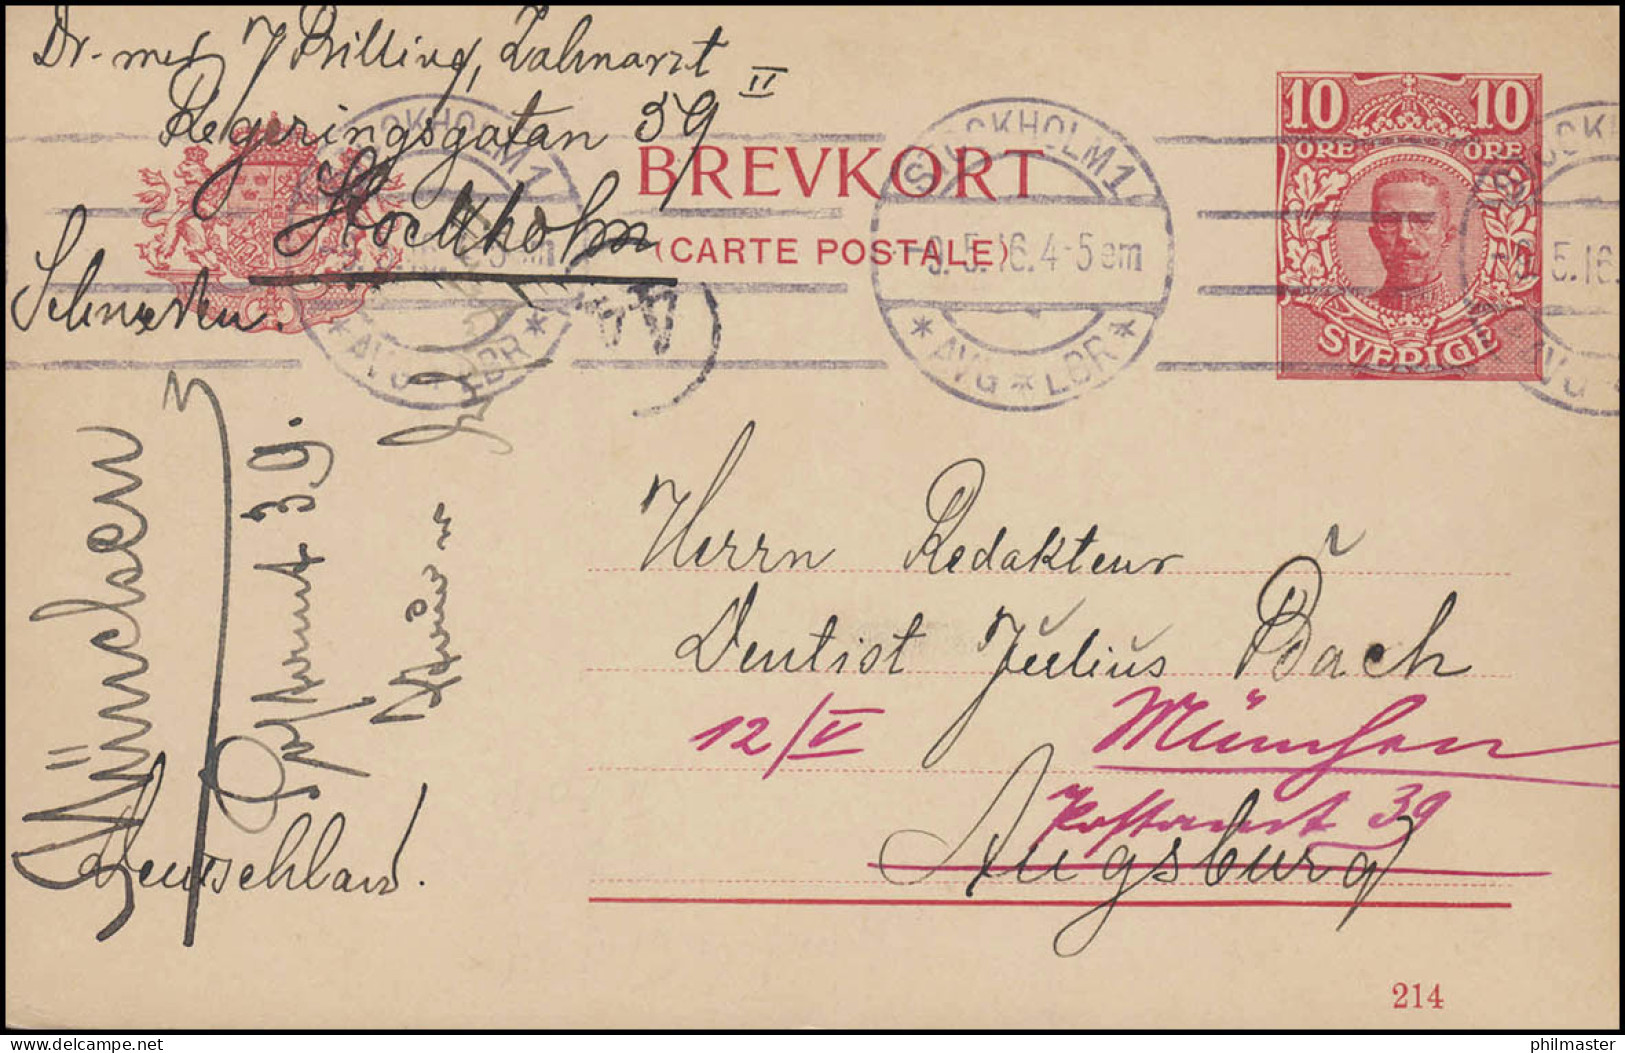 Postkarte P 30 BREFKORT König Gustav Mit DV 214, STOCKHOLM 9.5.16 Nach Augsburg - Ganzsachen